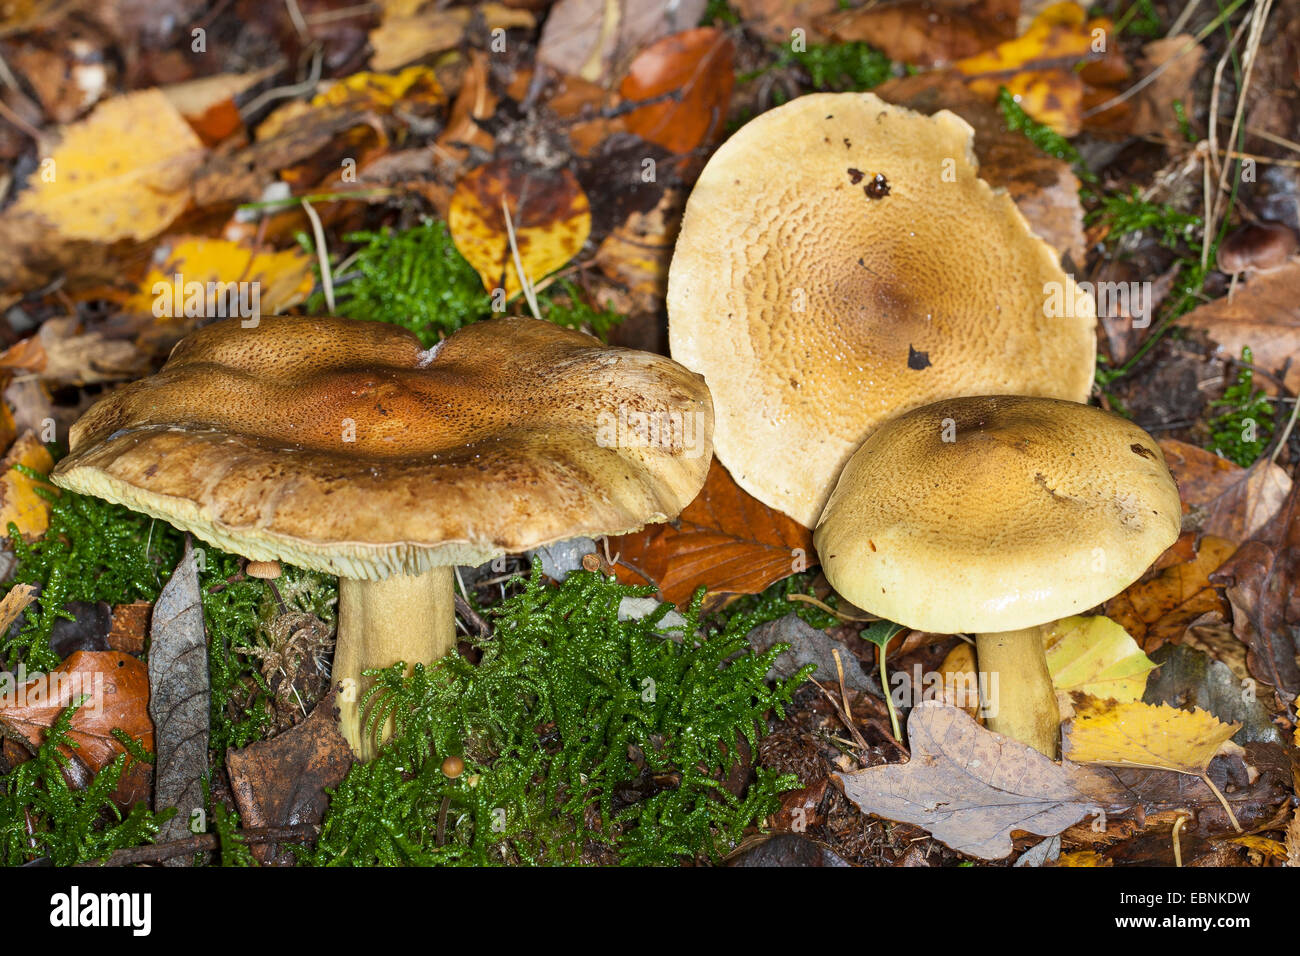 Man on horseback, Yellow knight, Yellow knight mushroom (Tricholoma equestre, Tricholoma flavovirens, Tricholoma auratum), three fruiting bodies on forest floor, Germany Stock Photo